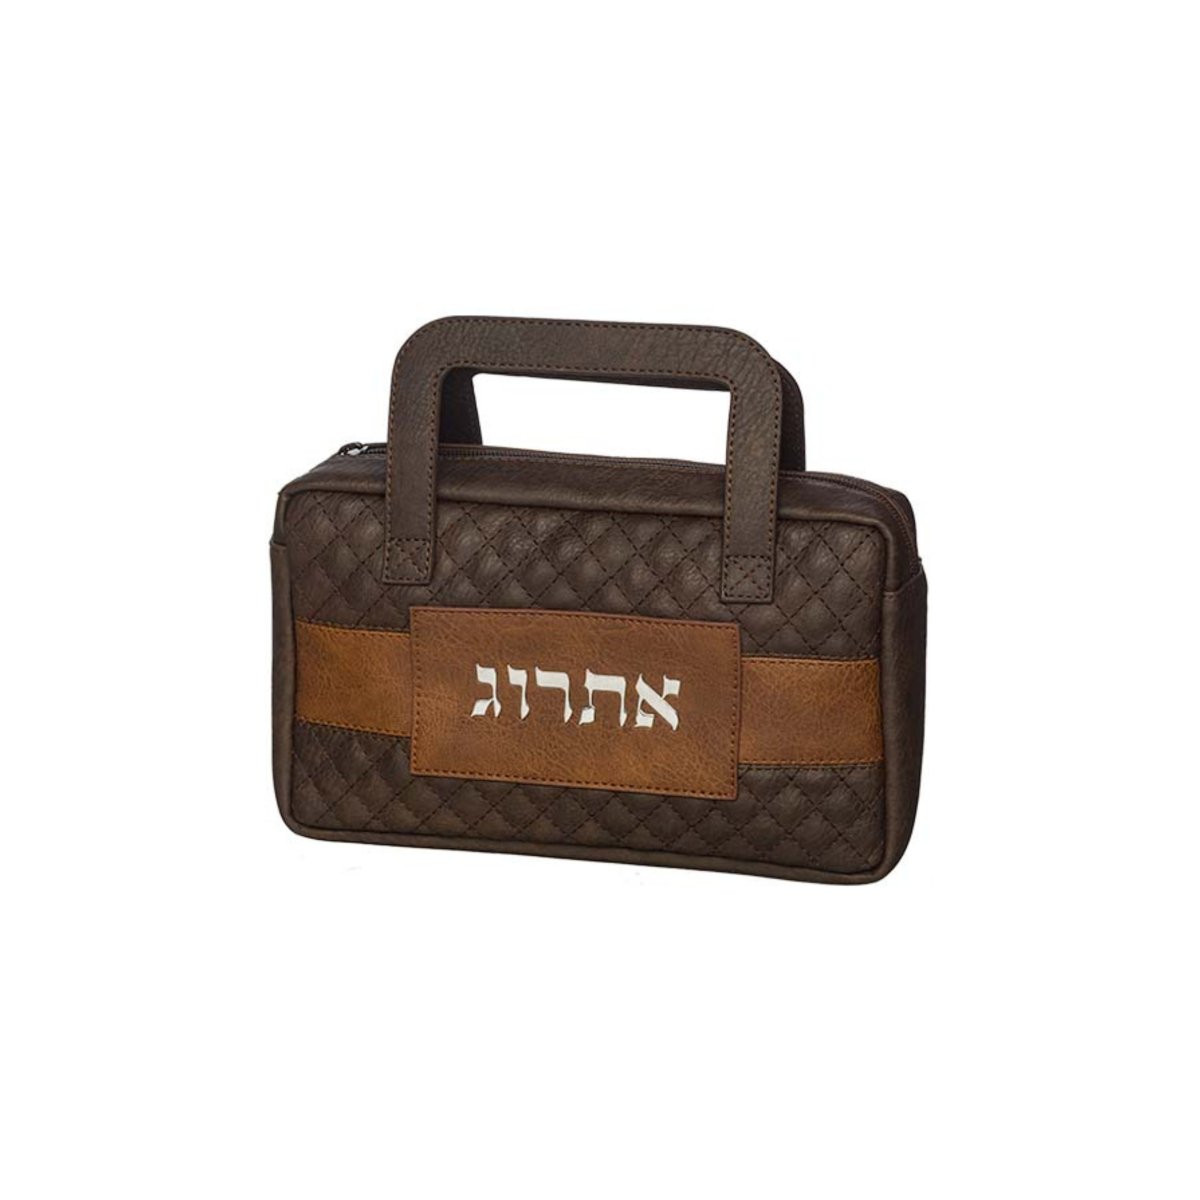 Egrog Bag Brown - Ofek's Judaica -